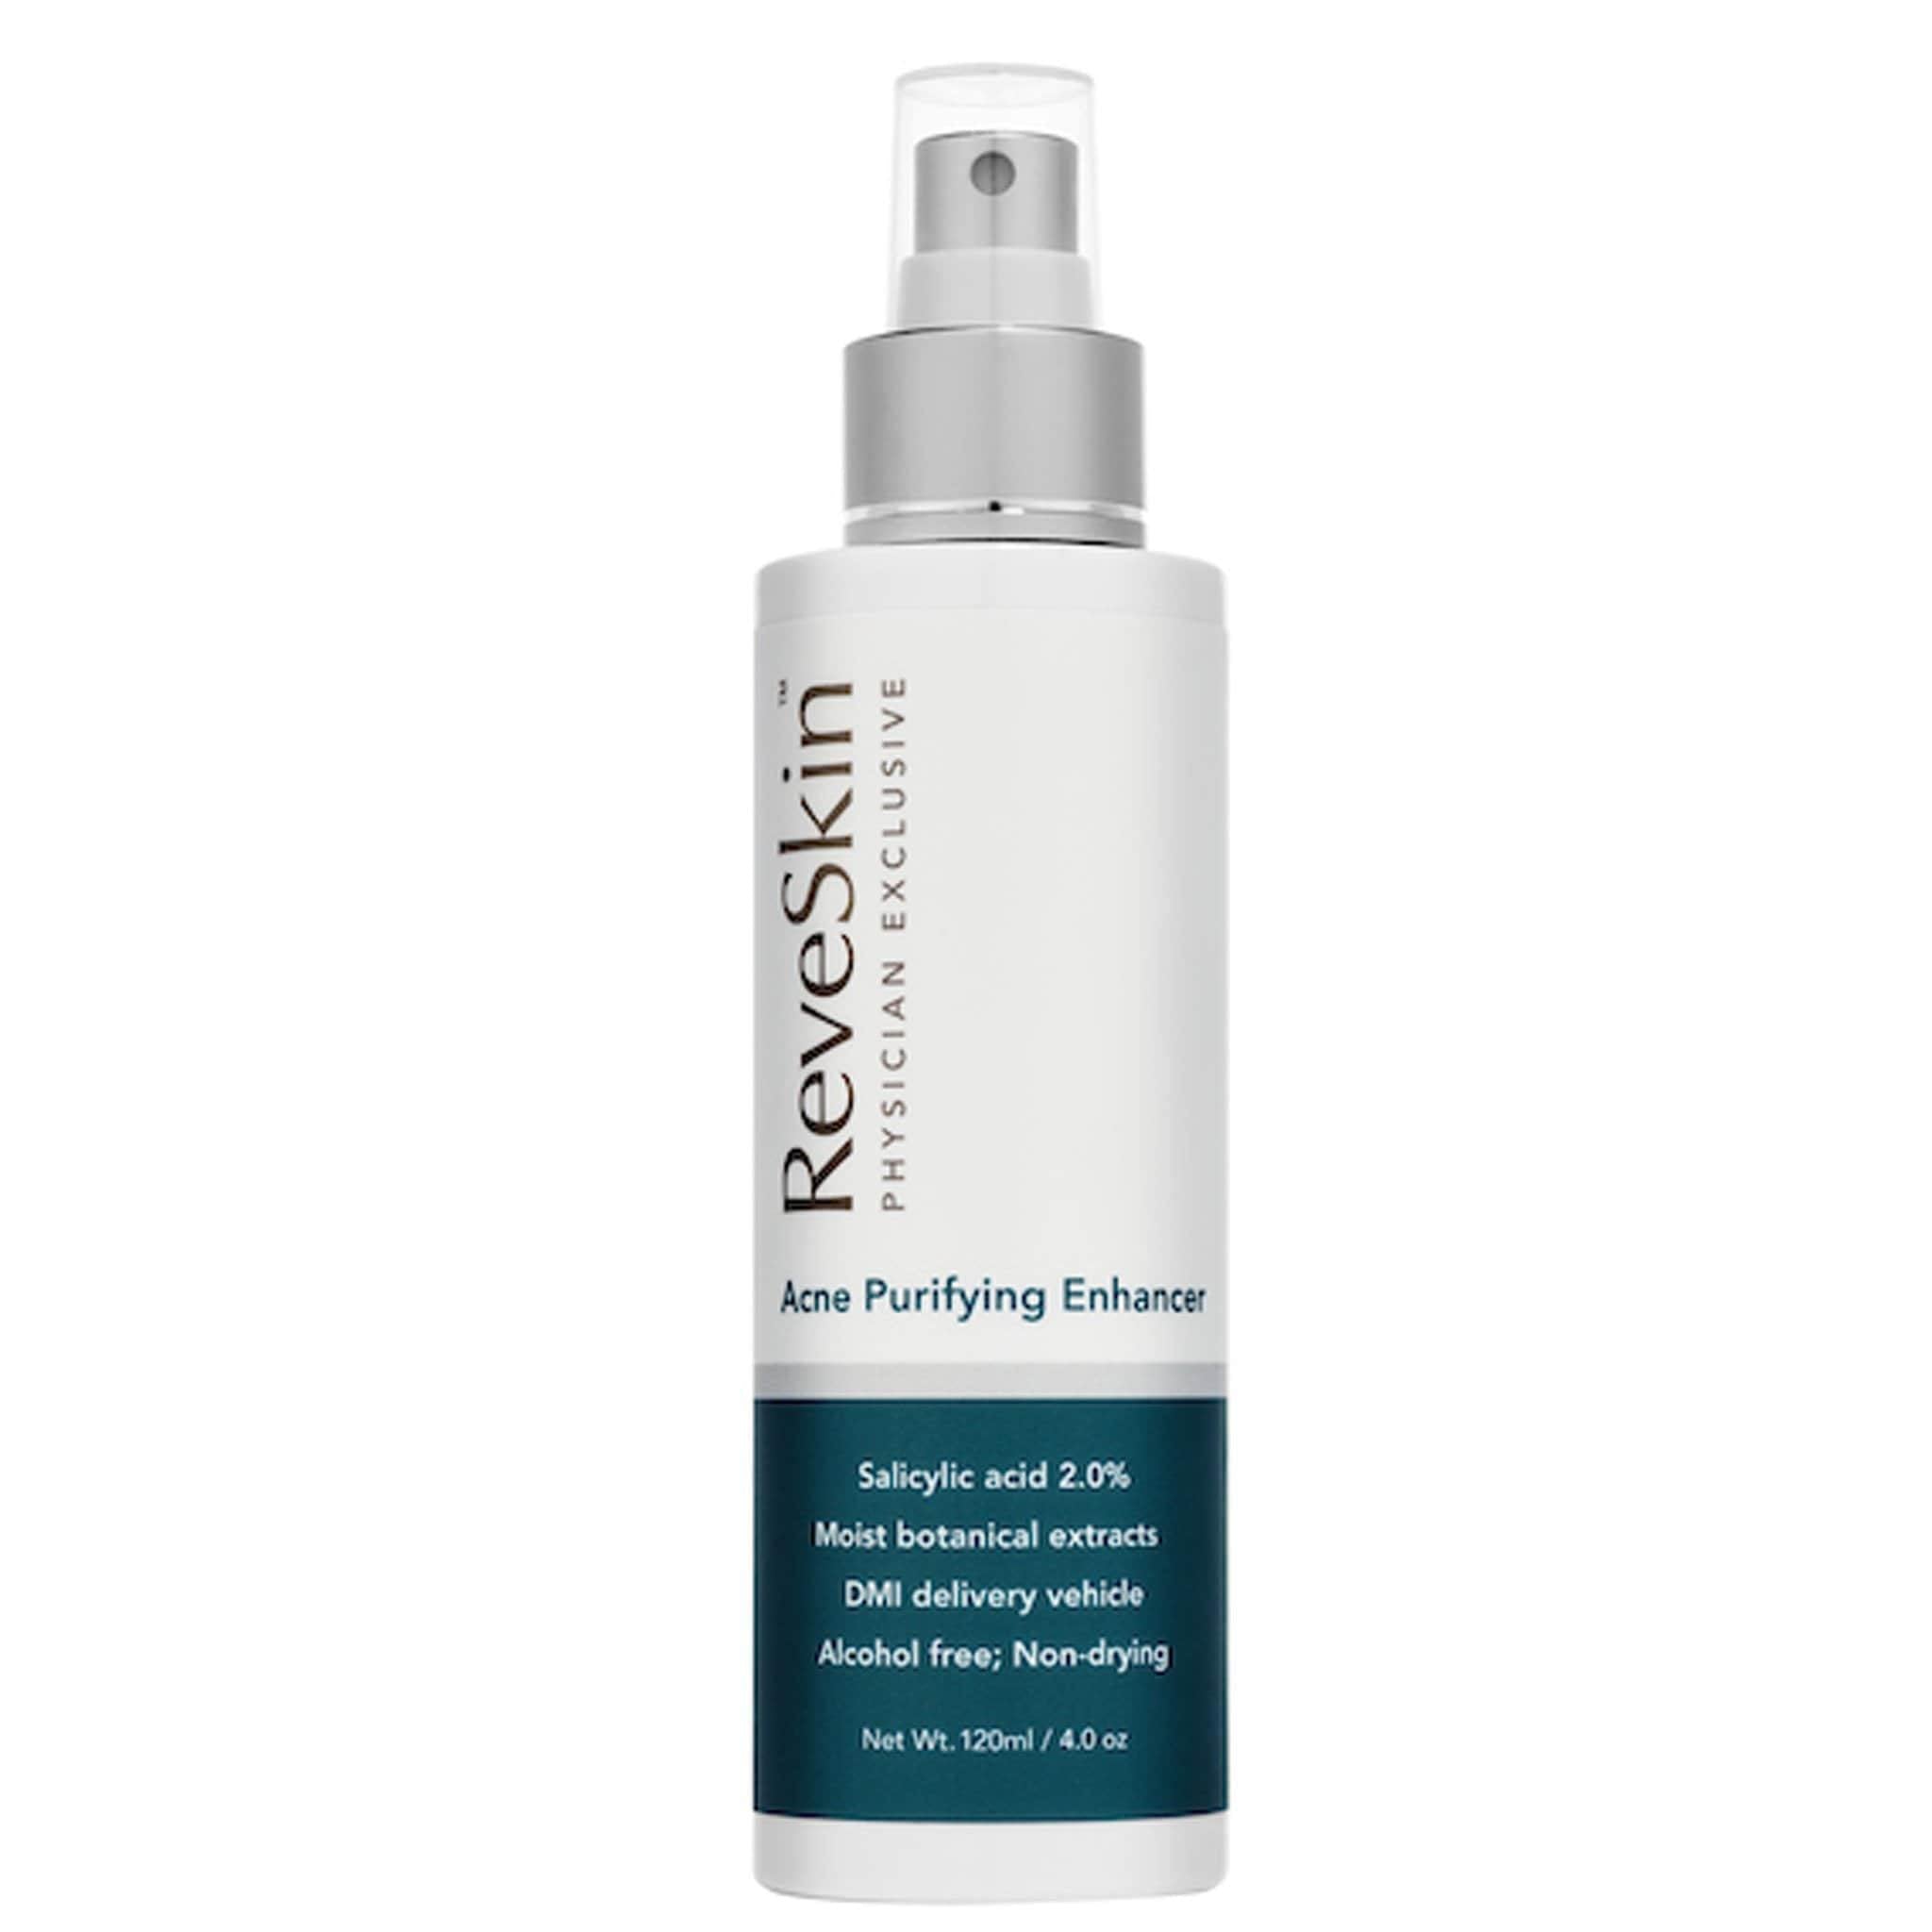 ReveSkin Acne Purifying Enhancer | Emerage Cosmetics | Exfoliators